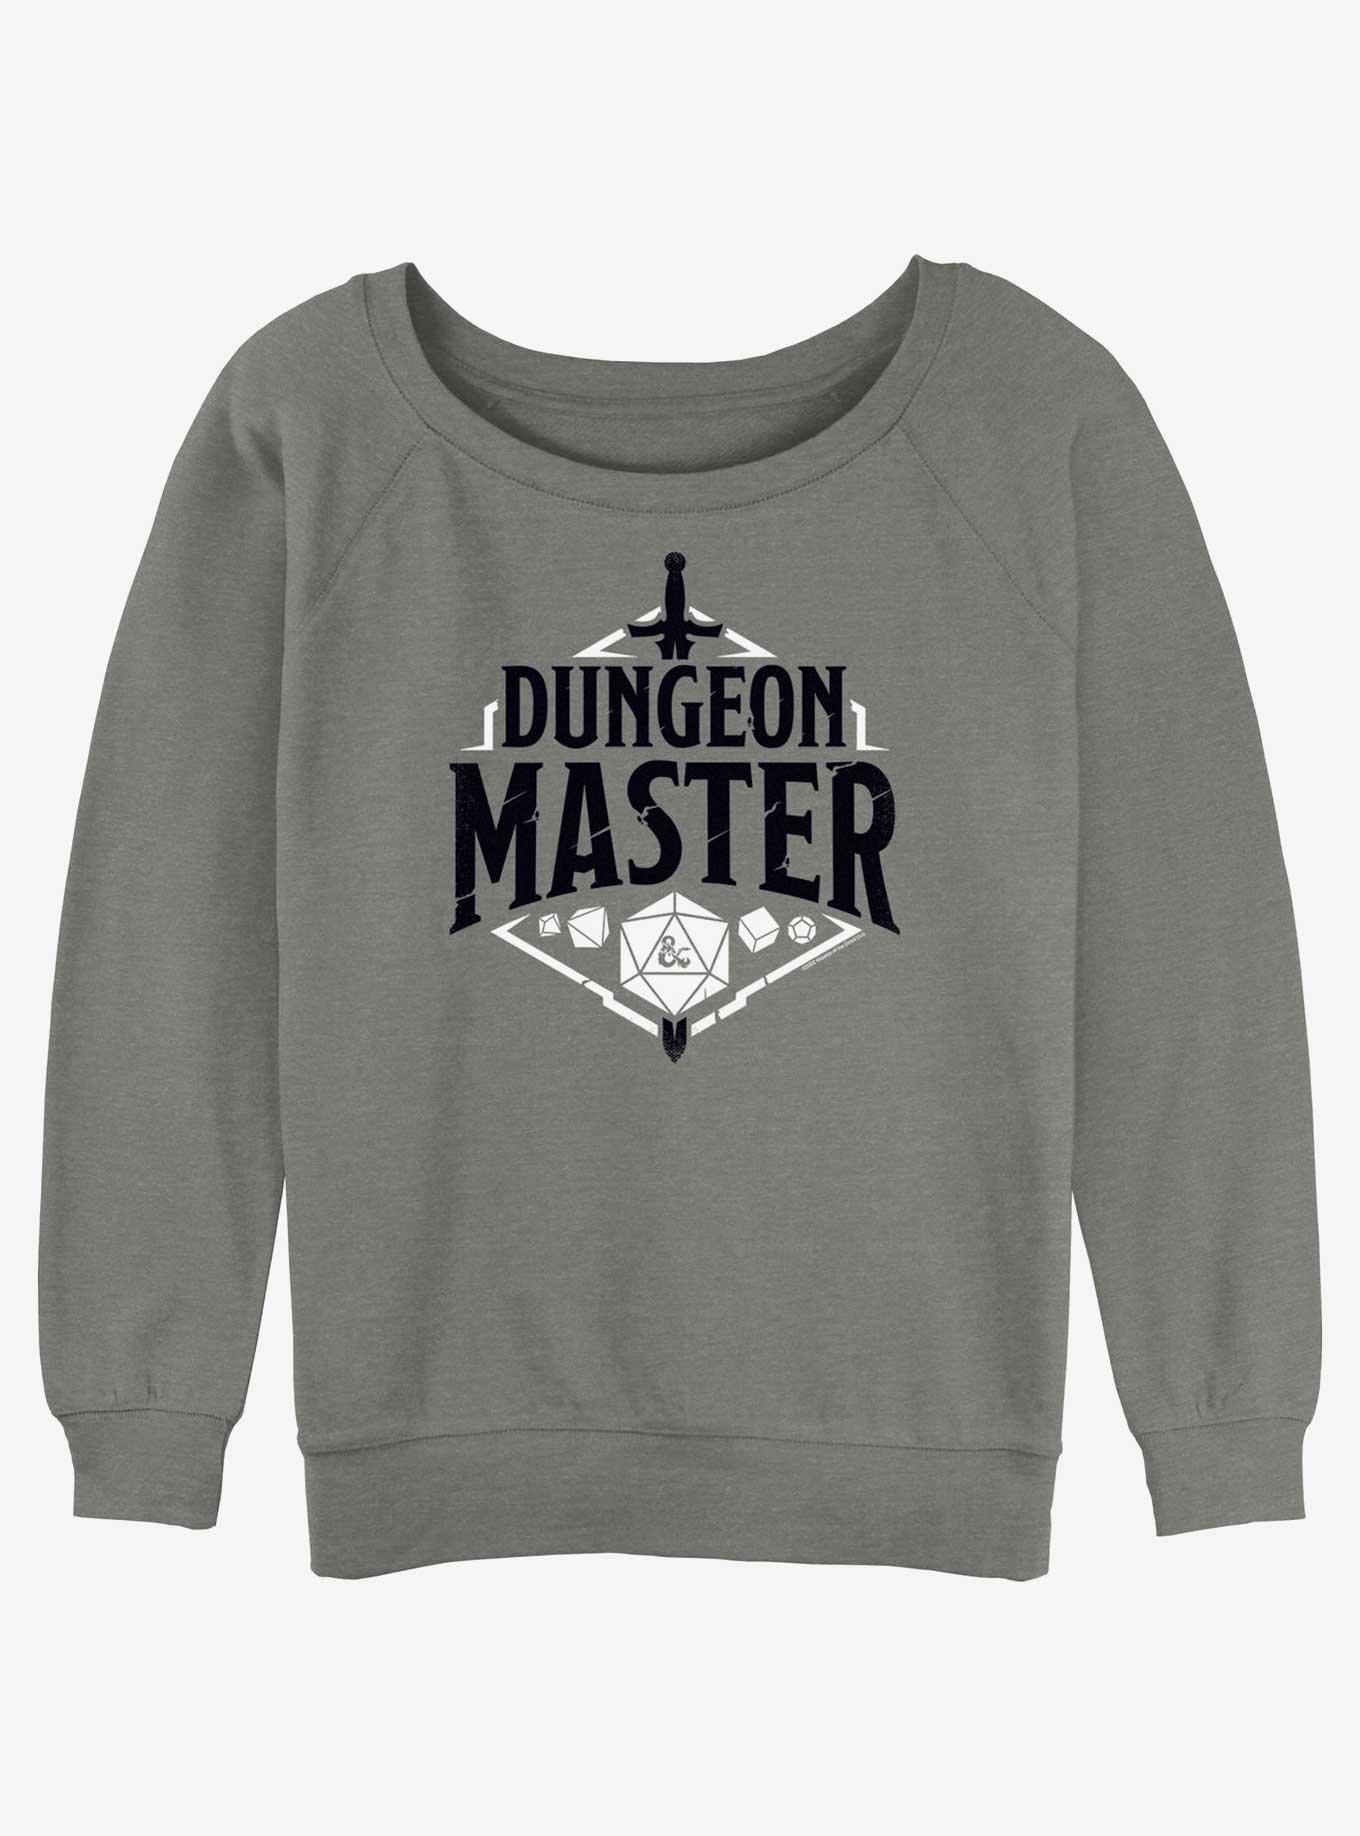 Dungeons & Dragons Dungeon Master Emblem Girls Slouchy Sweatshirt, GRAY HTR, hi-res